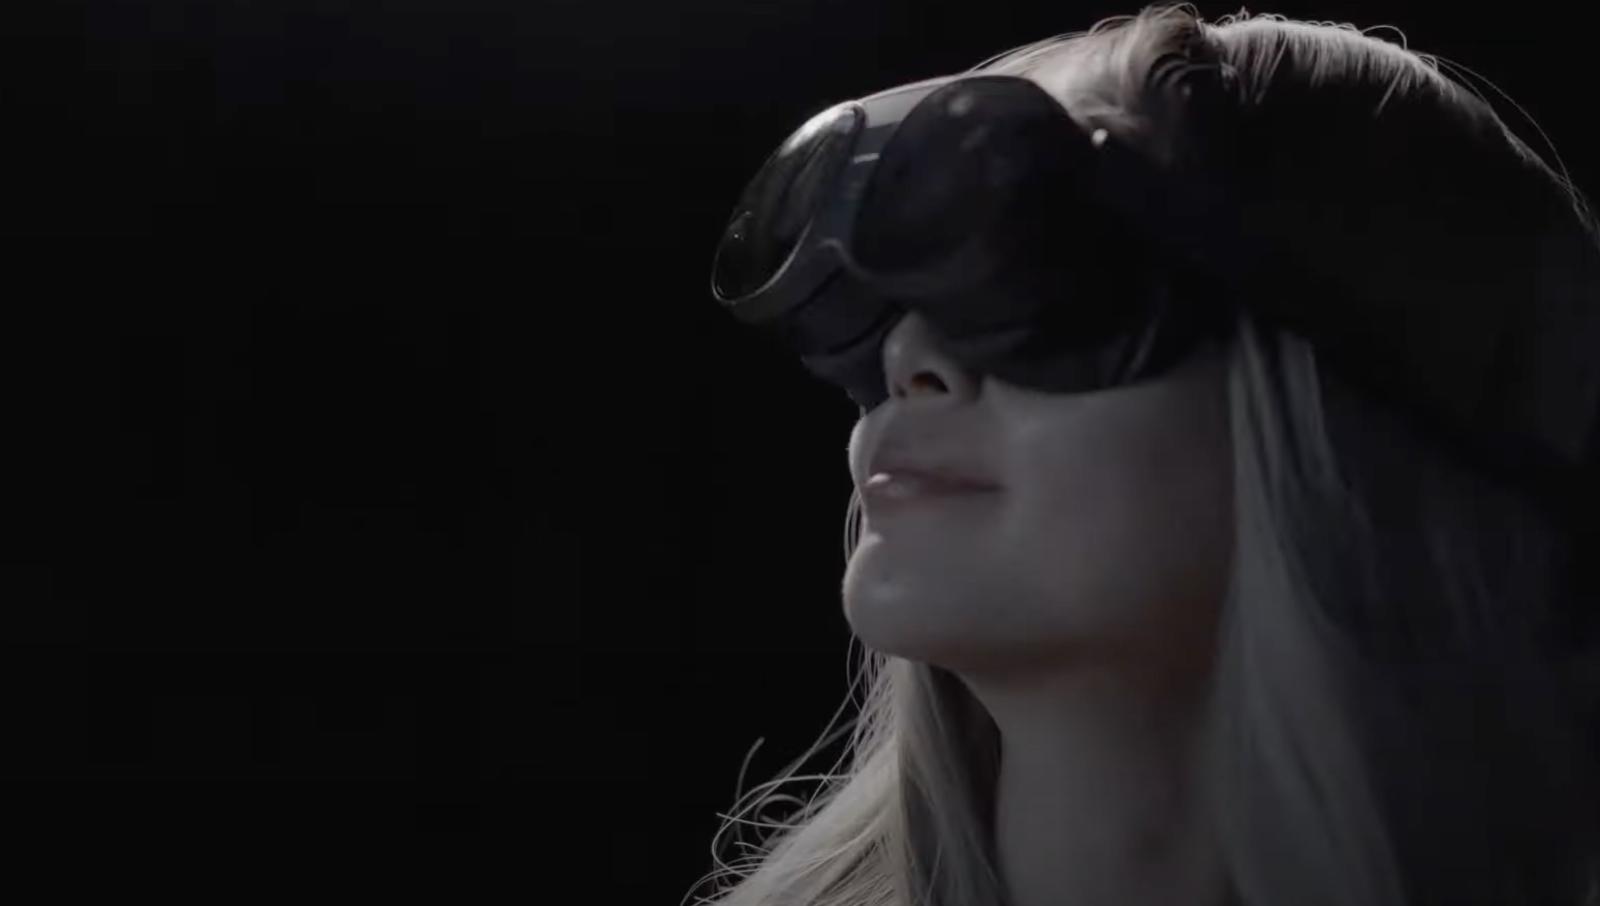 Transfr, a VR platform for workforce training, raises $40M